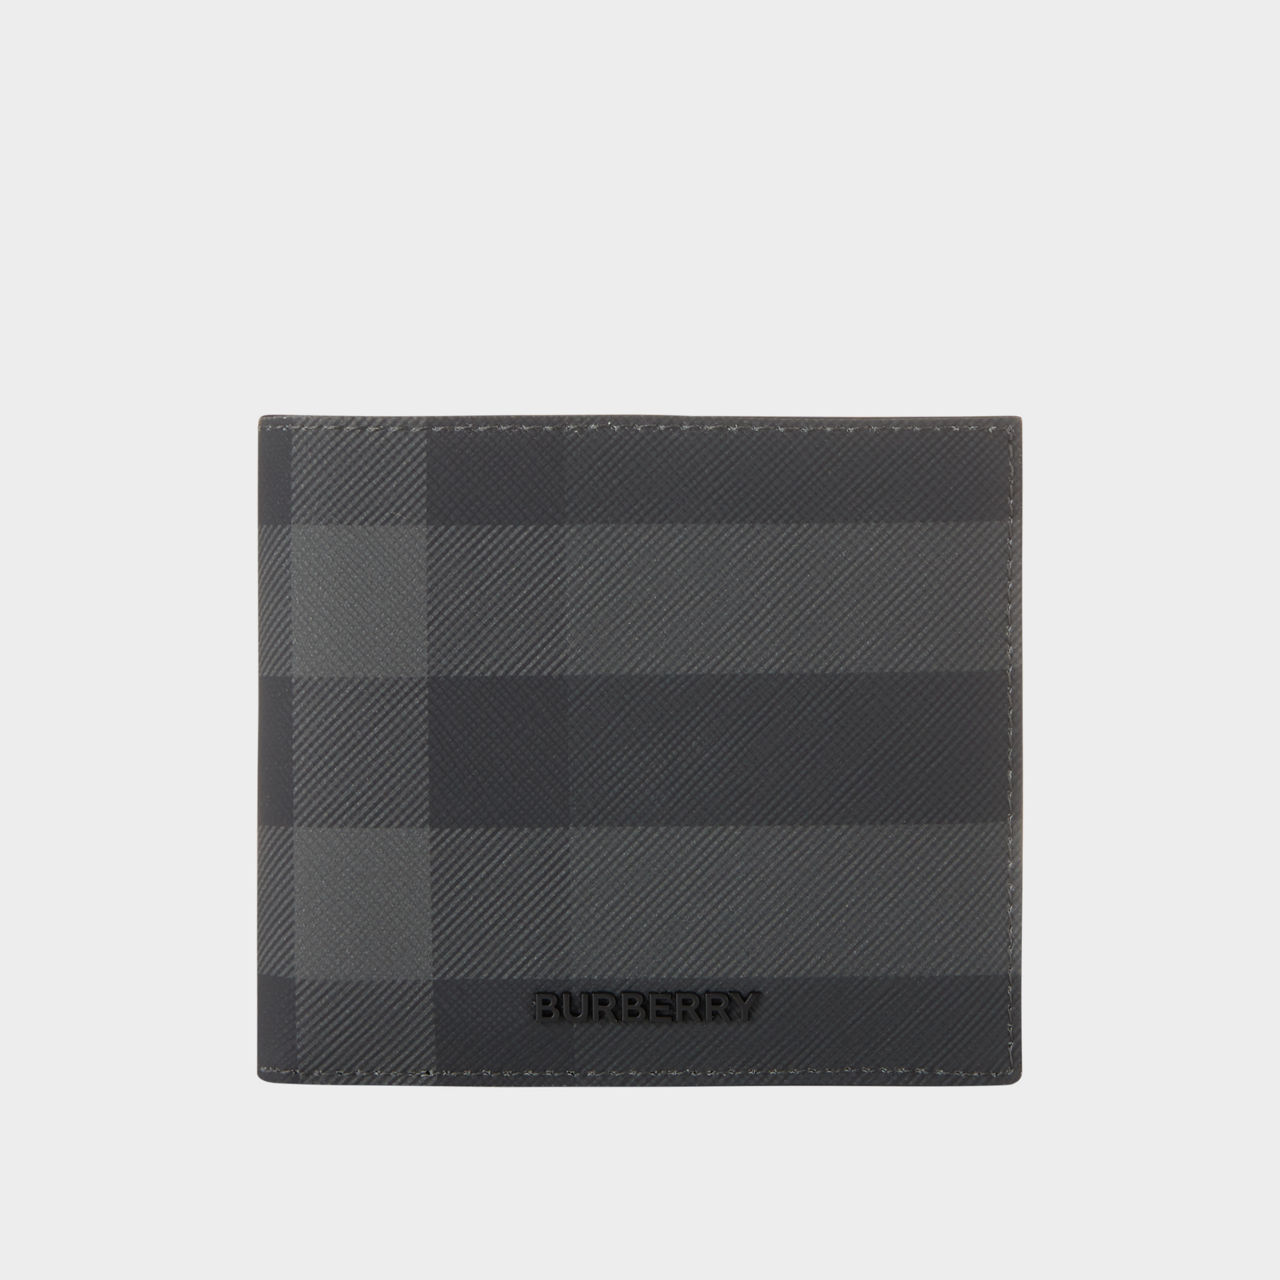 Black Leather Card Holder Wallet - Galway Irish Crystal